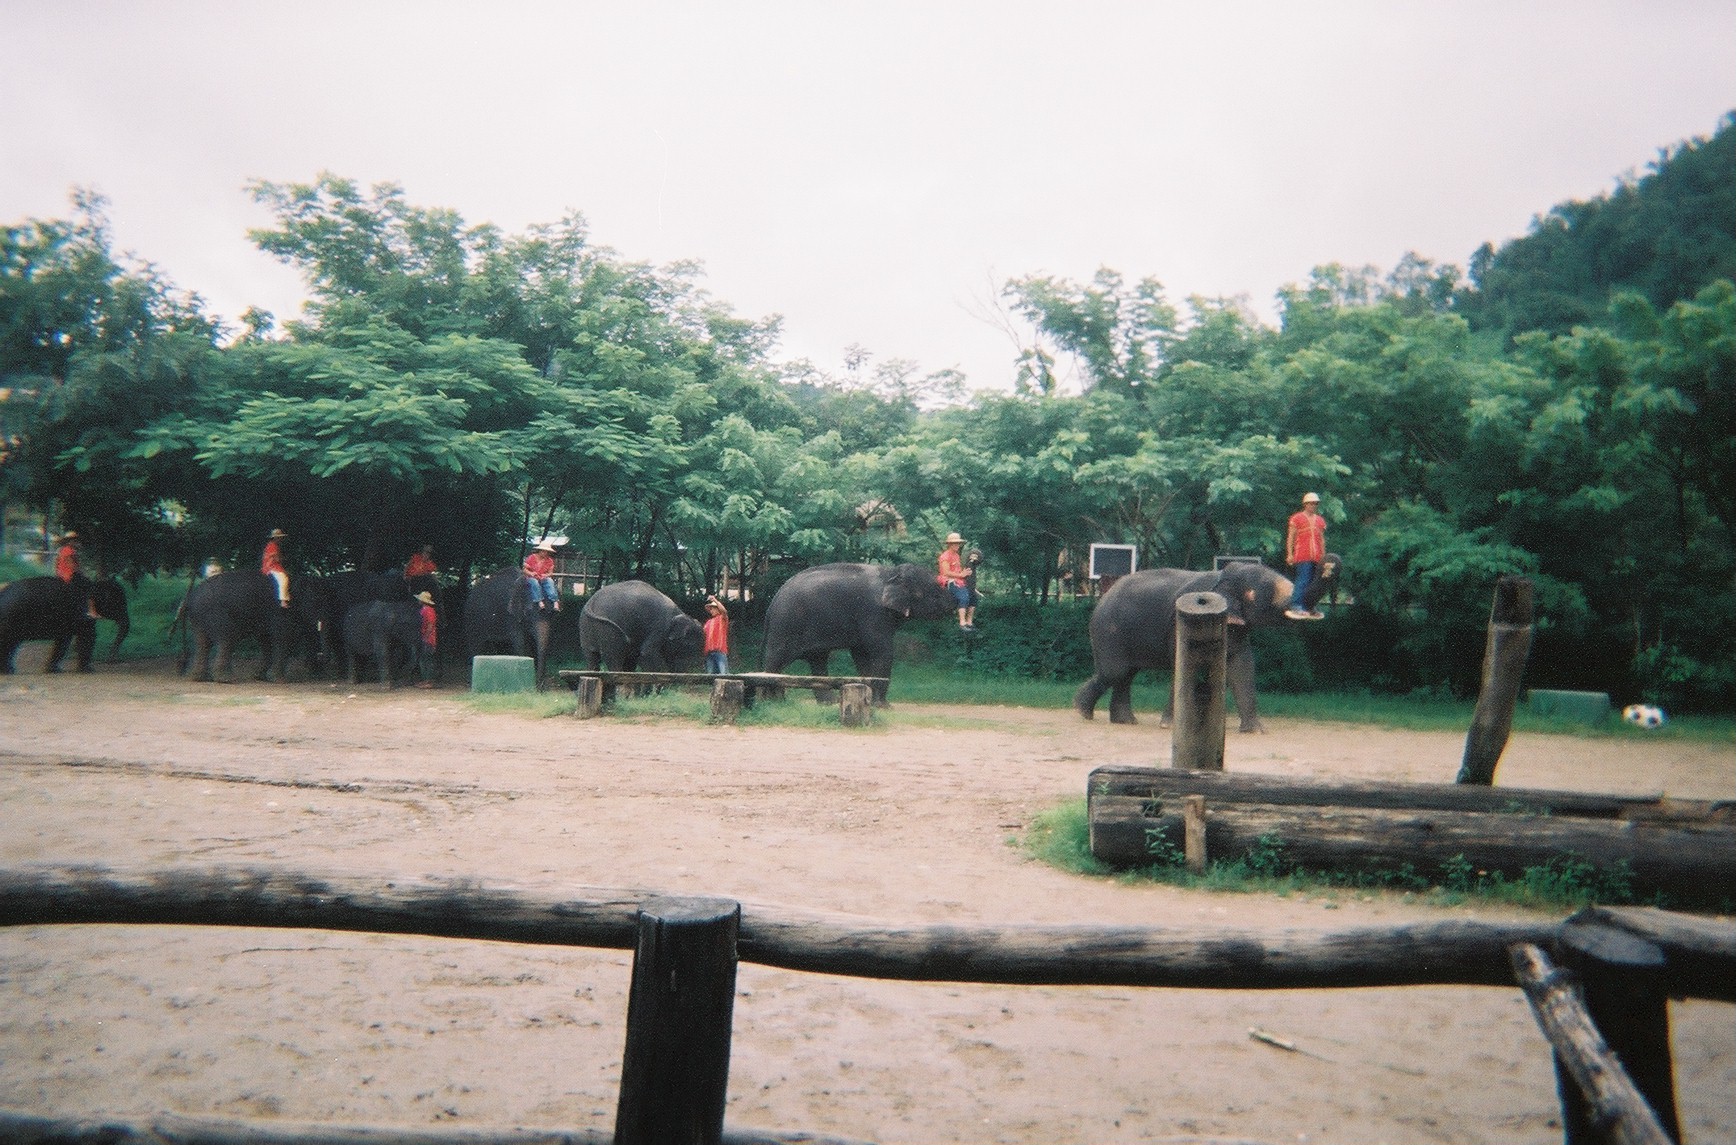 Elephants on Parade